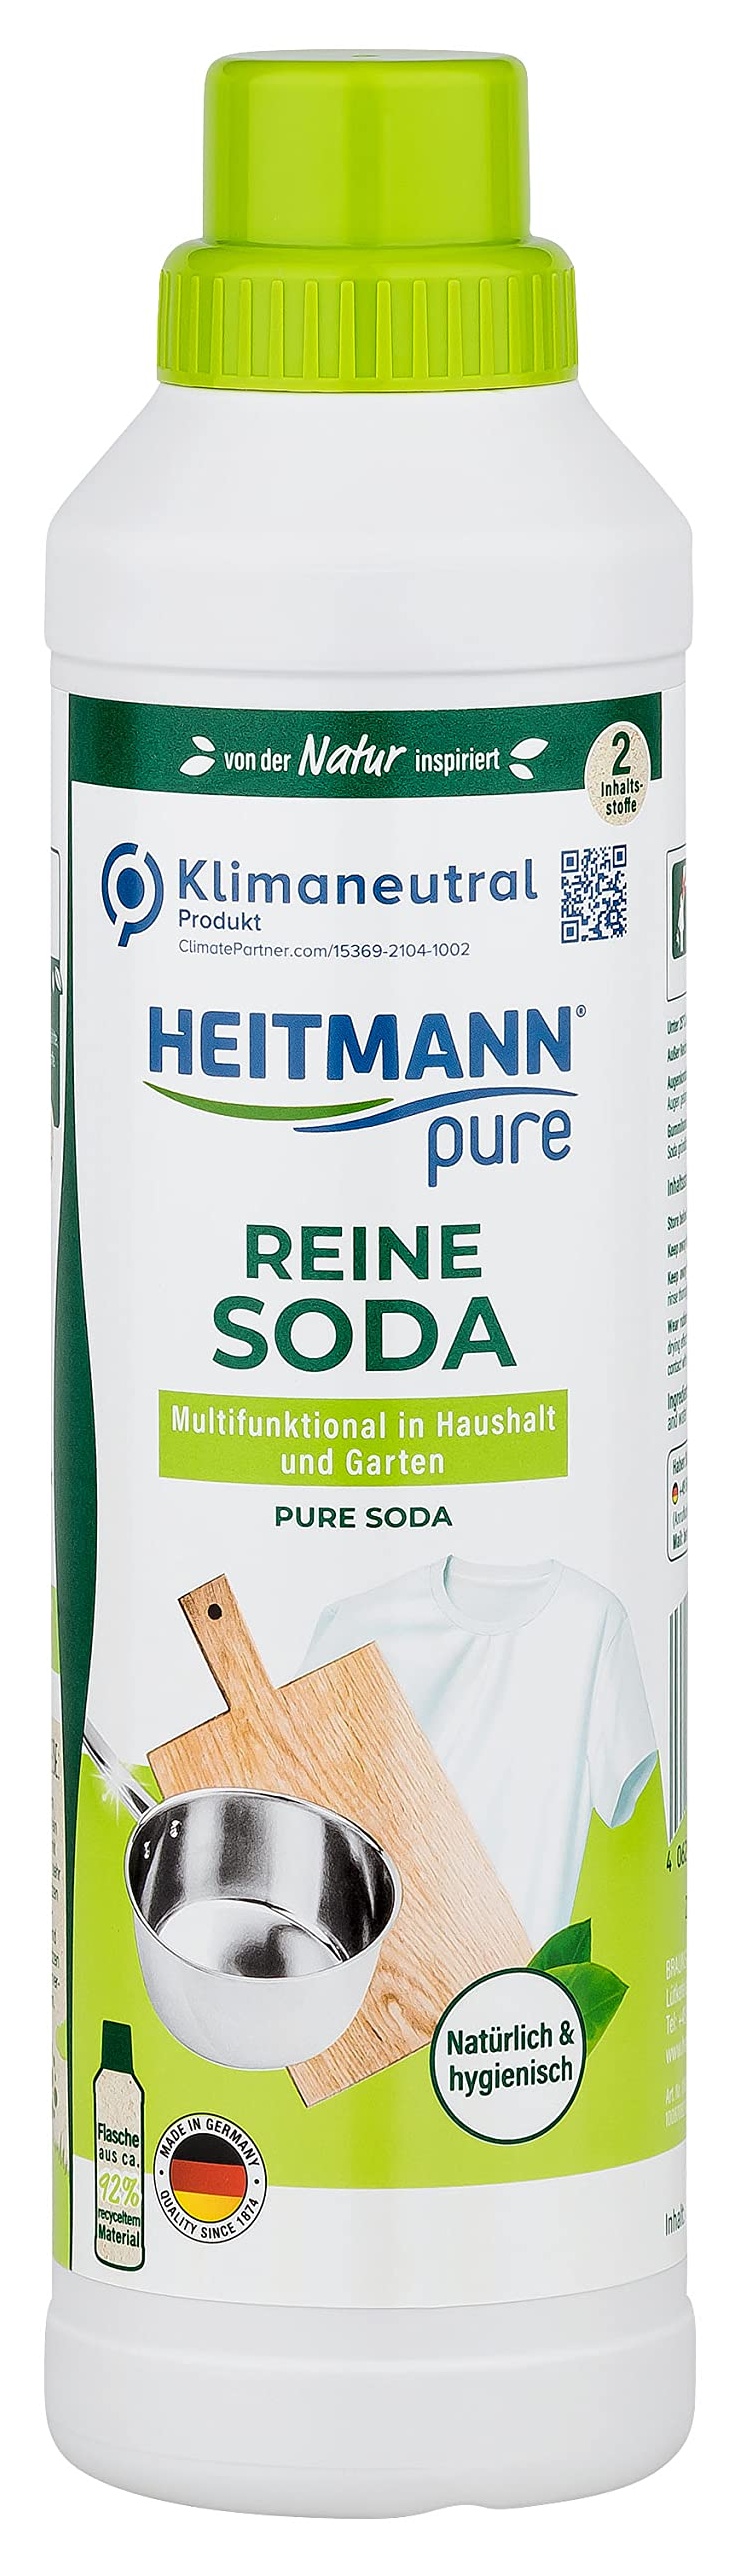 Bild Pure Reine Soda 750 ml